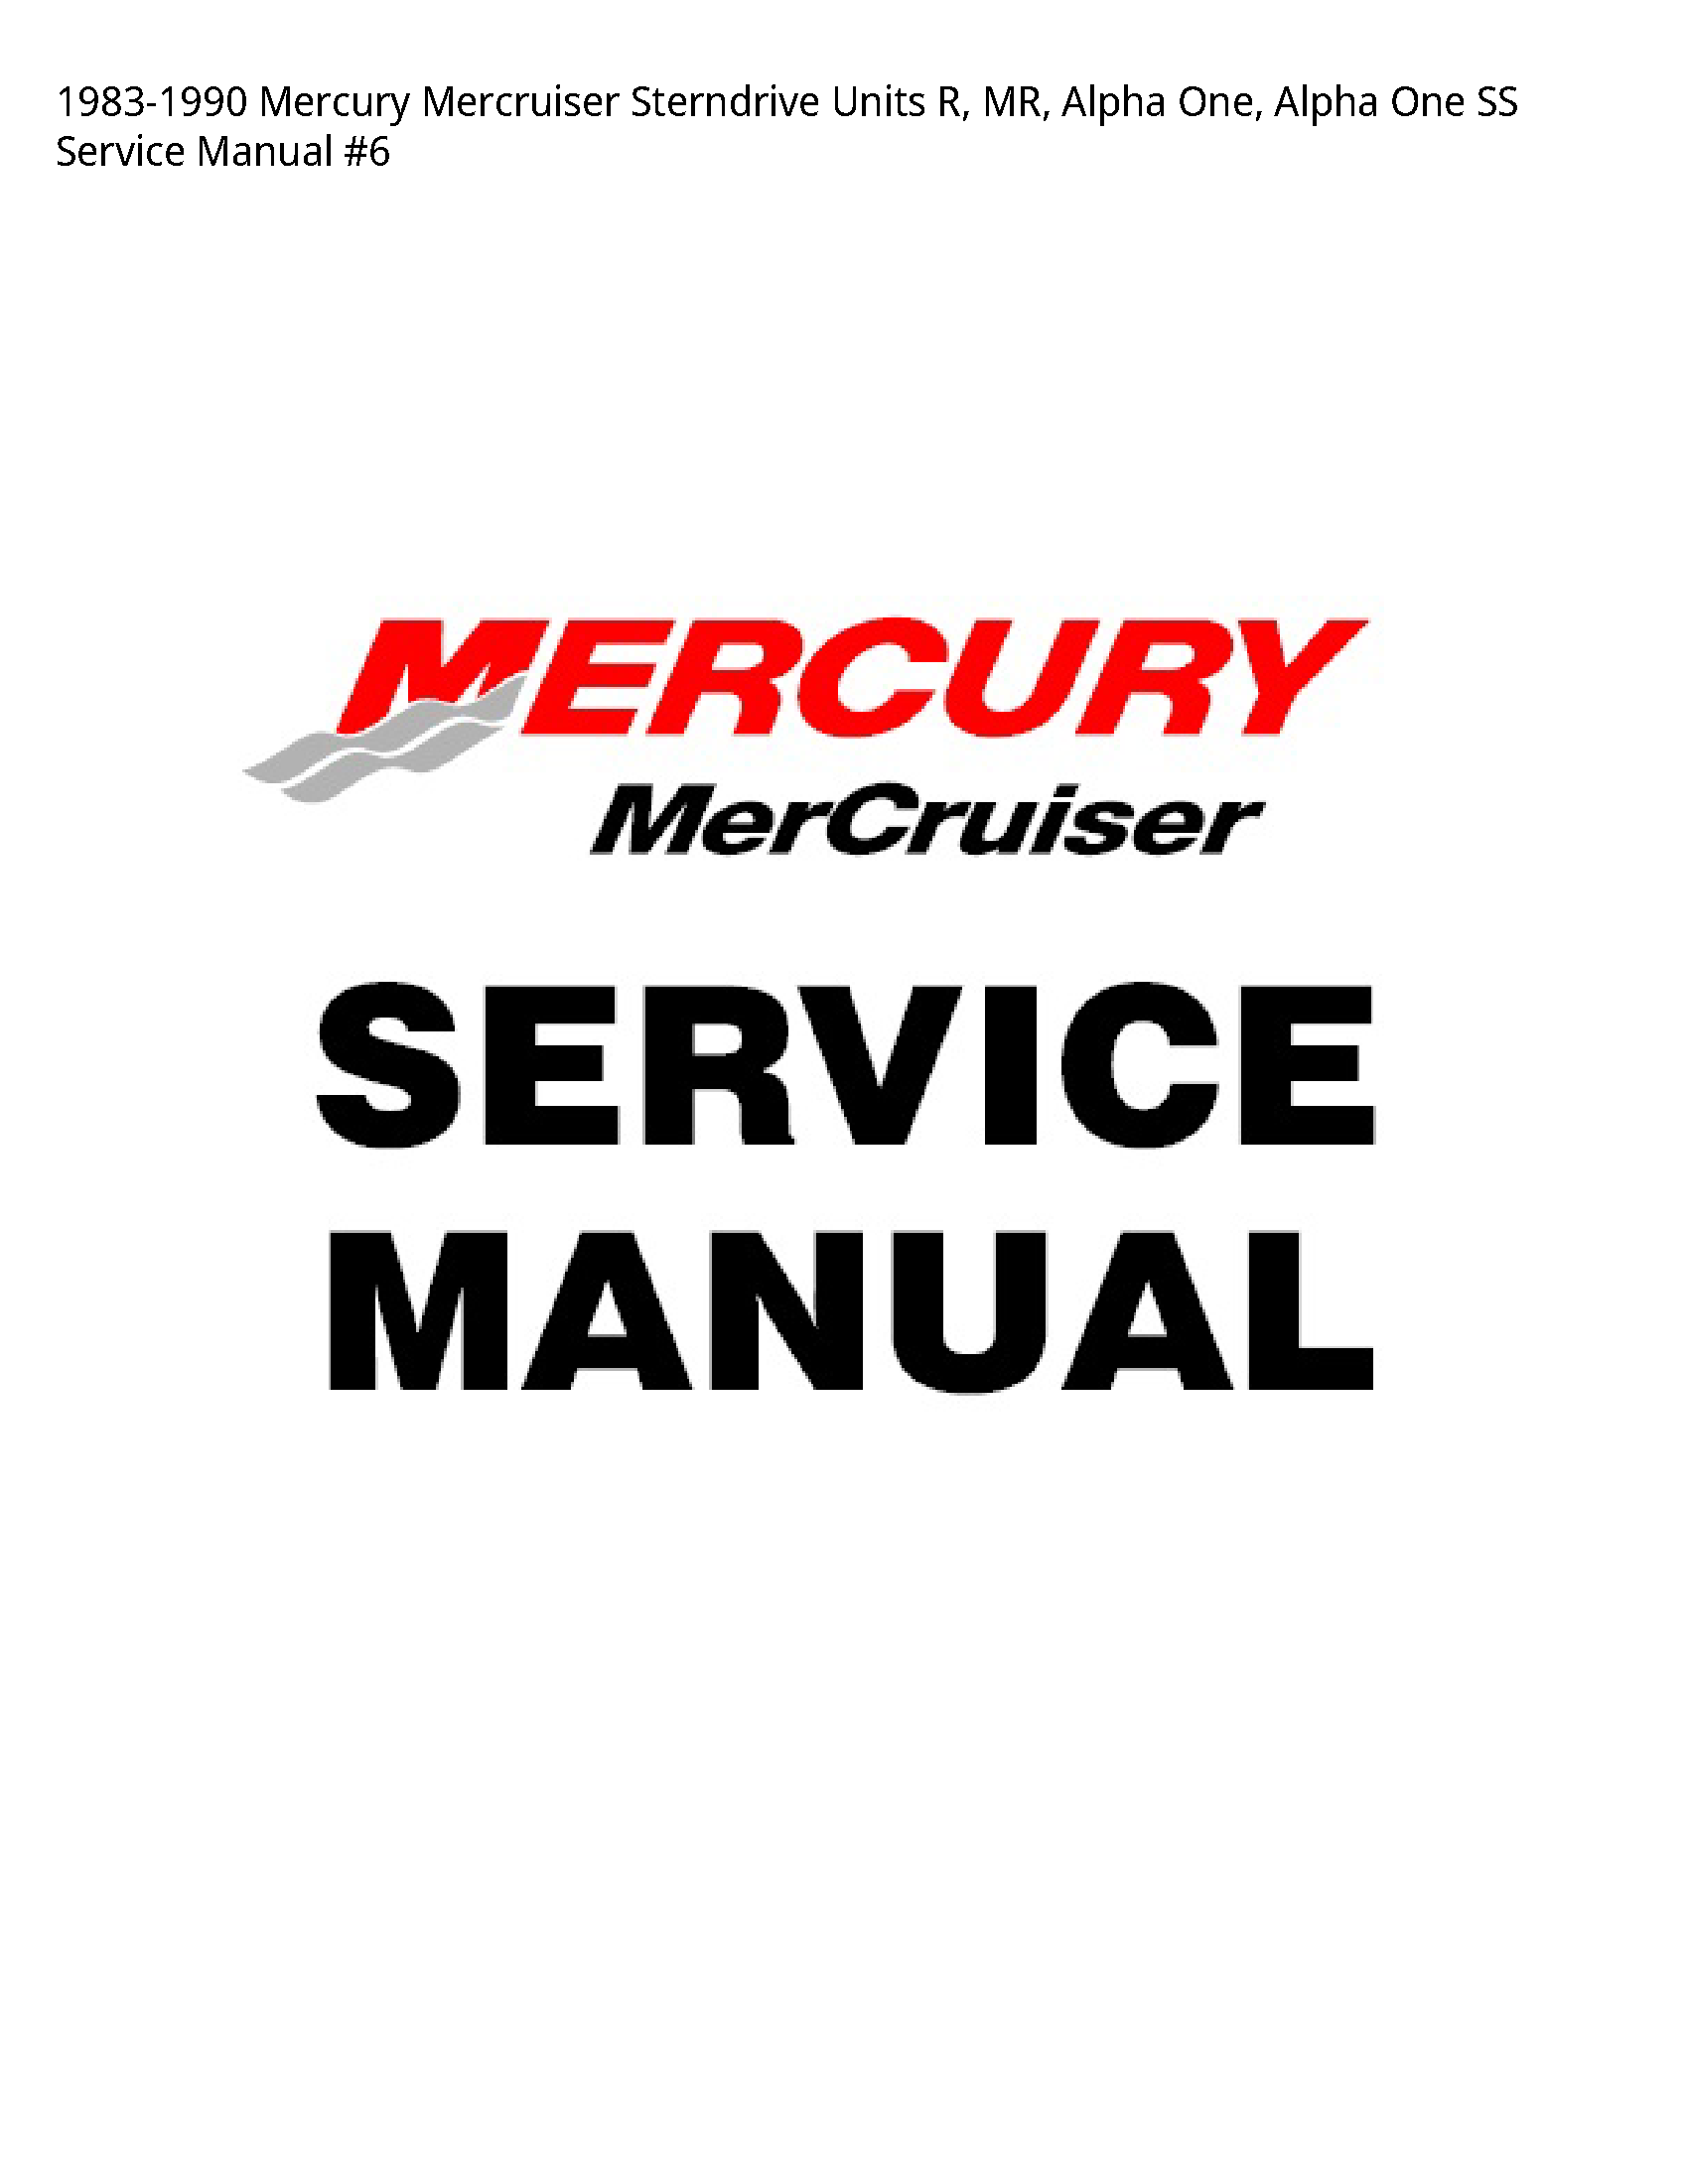 Mercury Mercruiser Sterndrive Units R manual